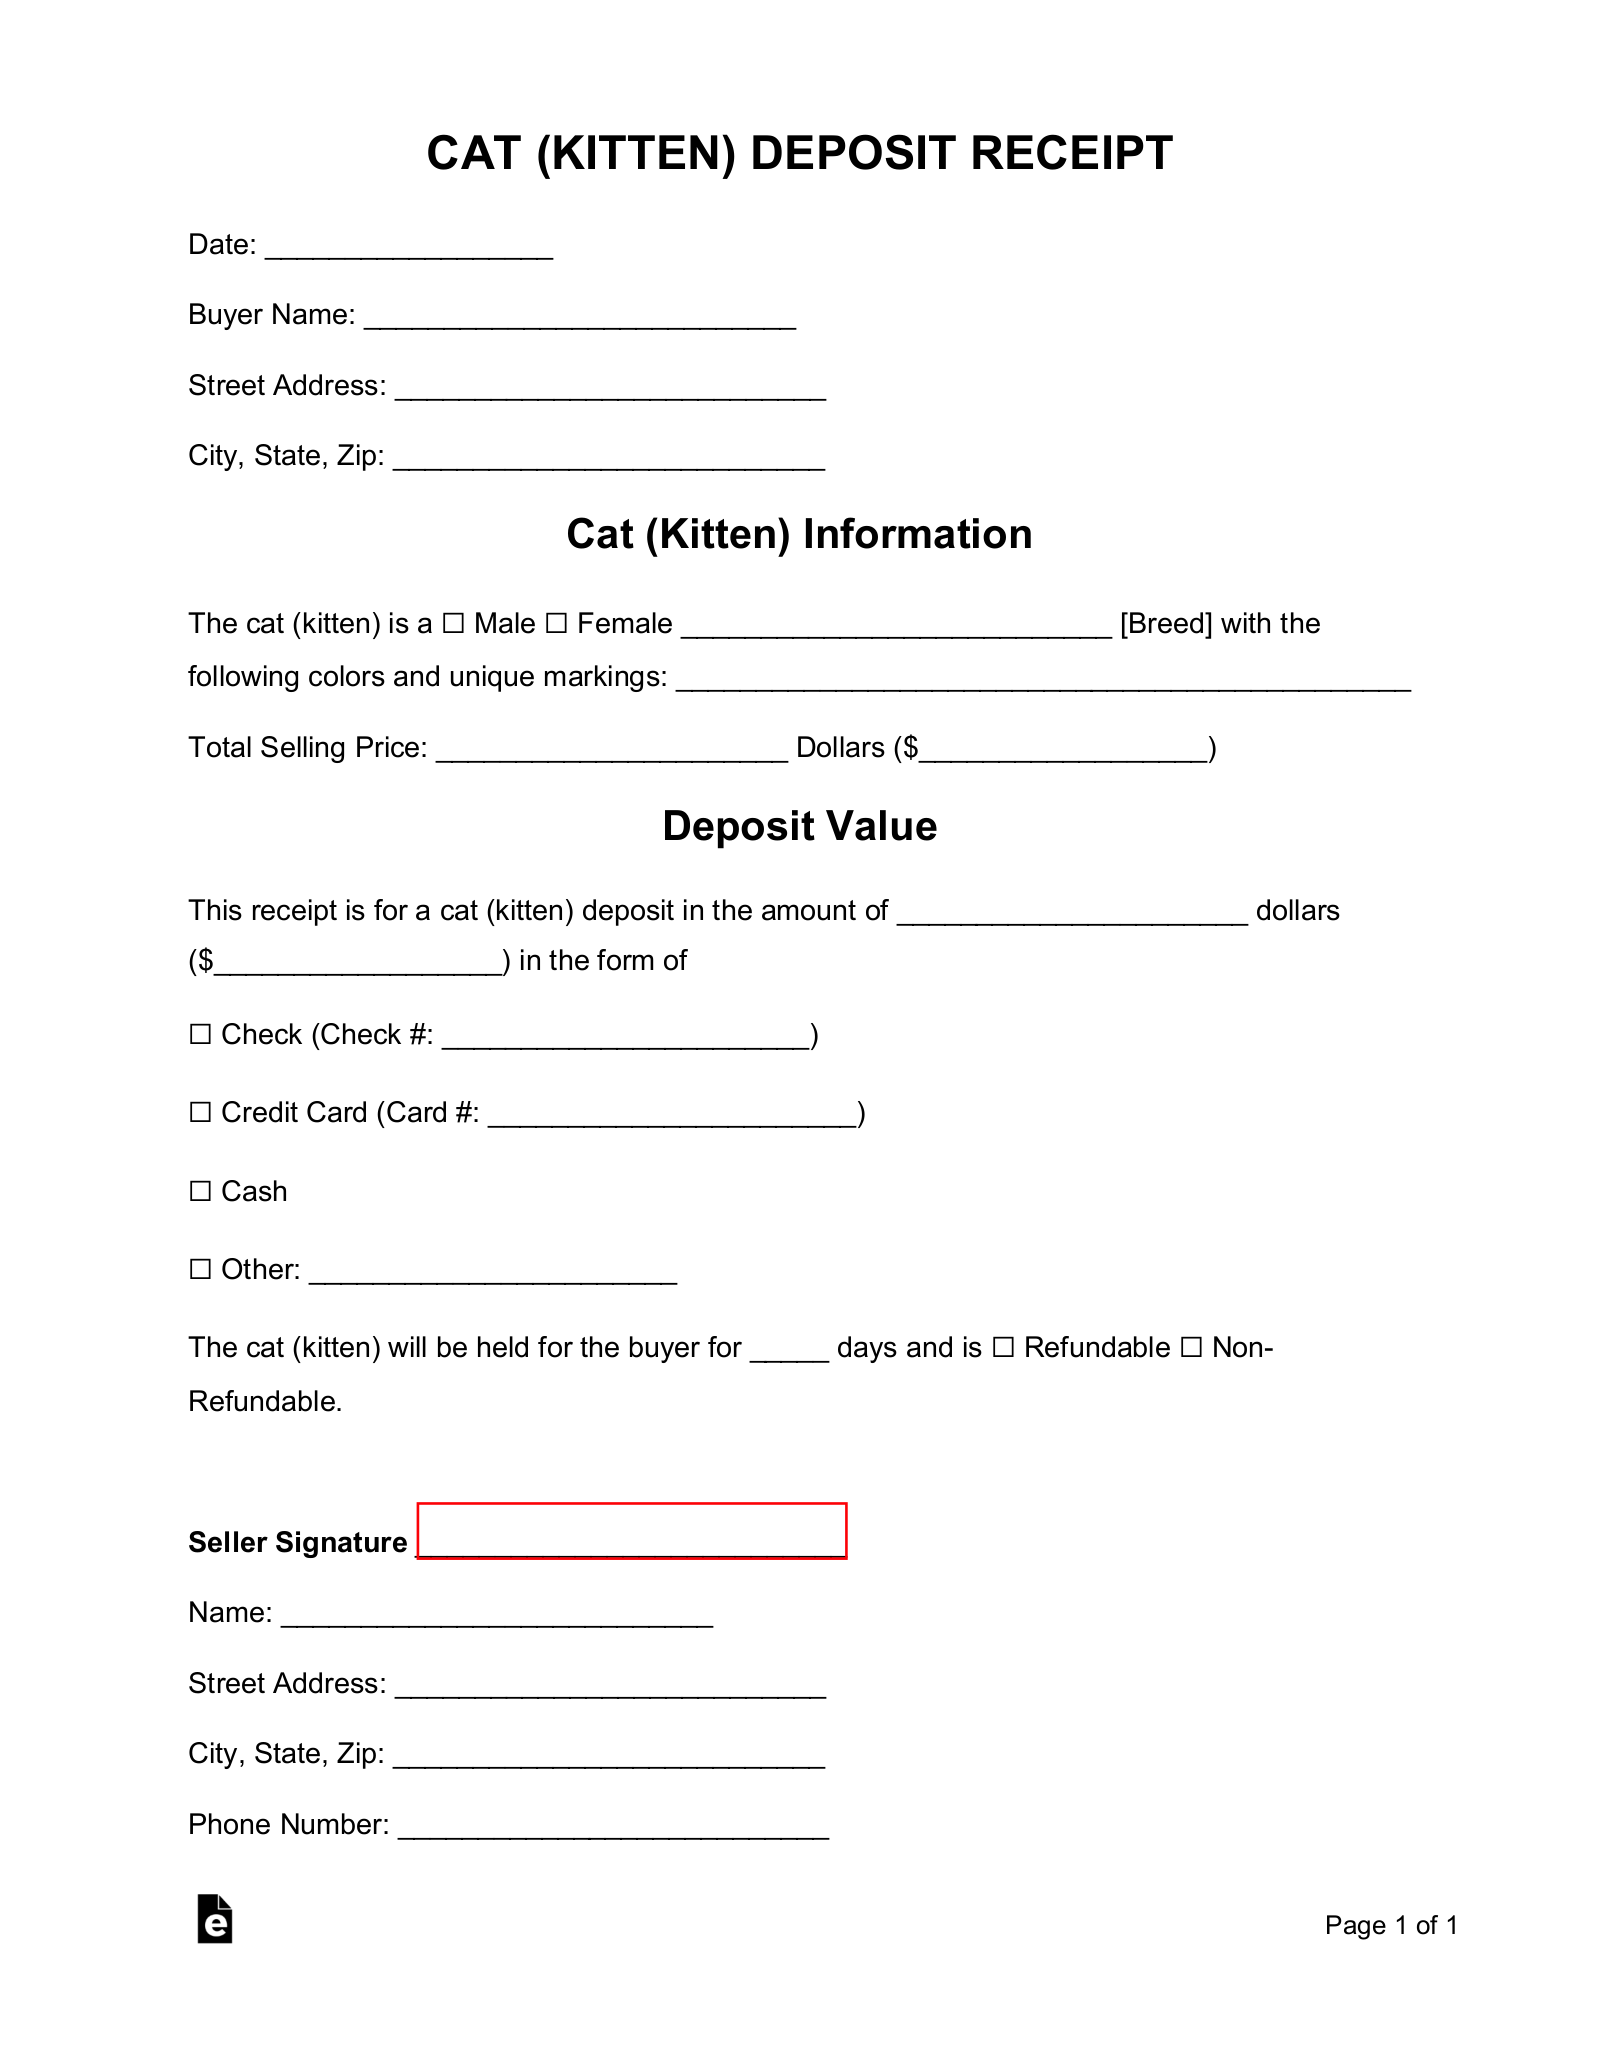 Cat (Kitten) Deposit Receipt Template